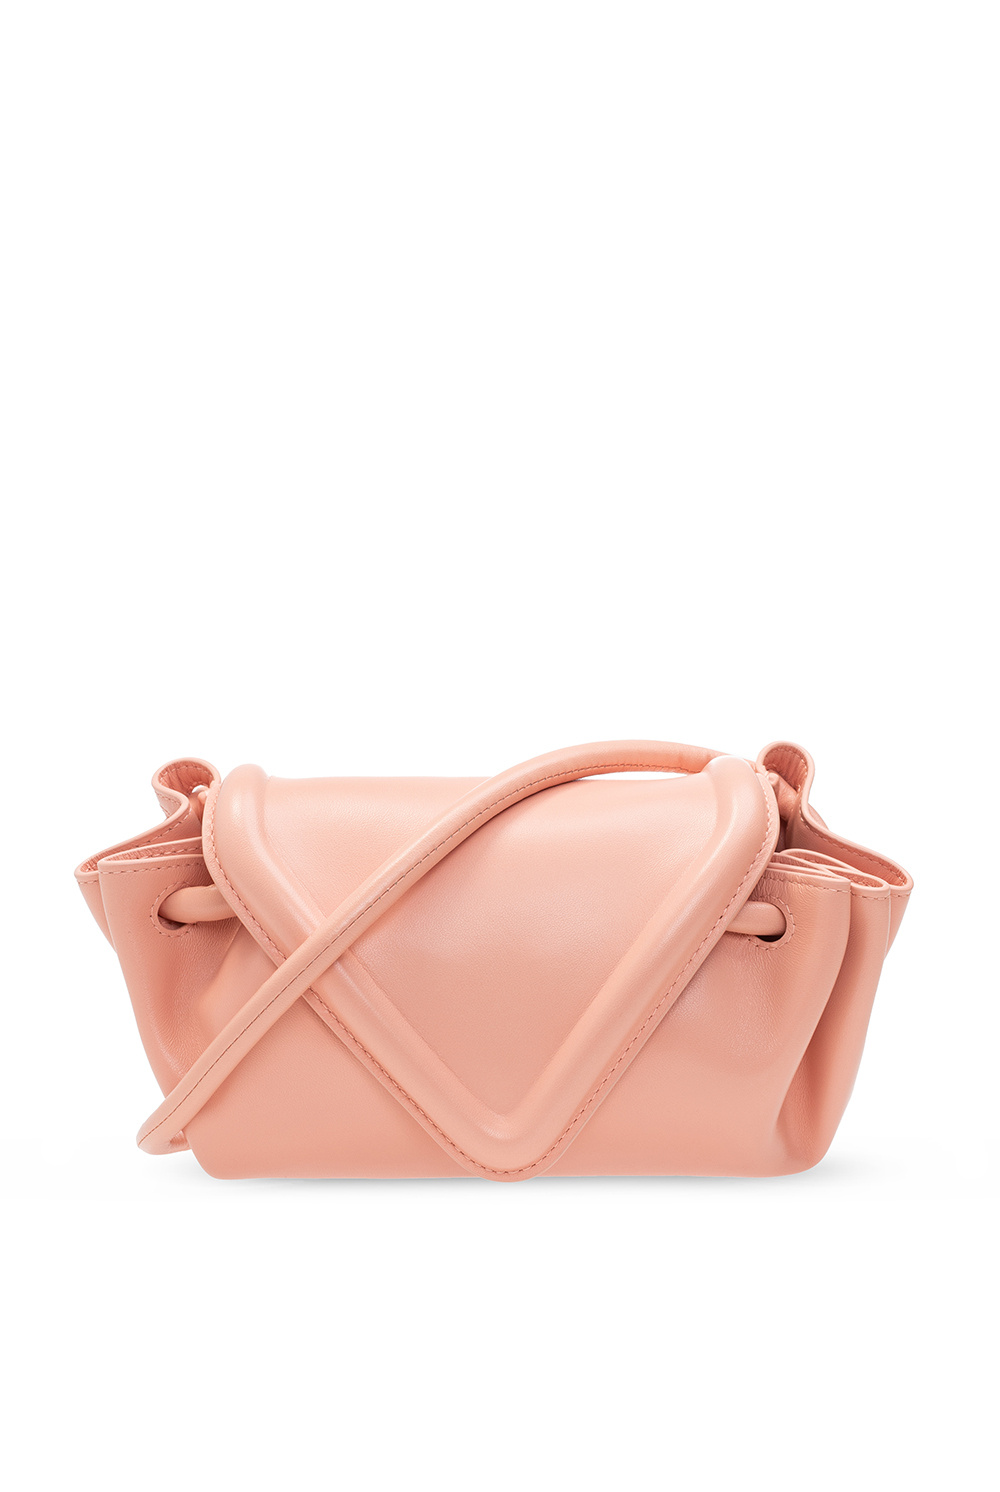 Bottega Veneta Olimpia Stitch Pink Intrecciato Leather Crossbody Bag